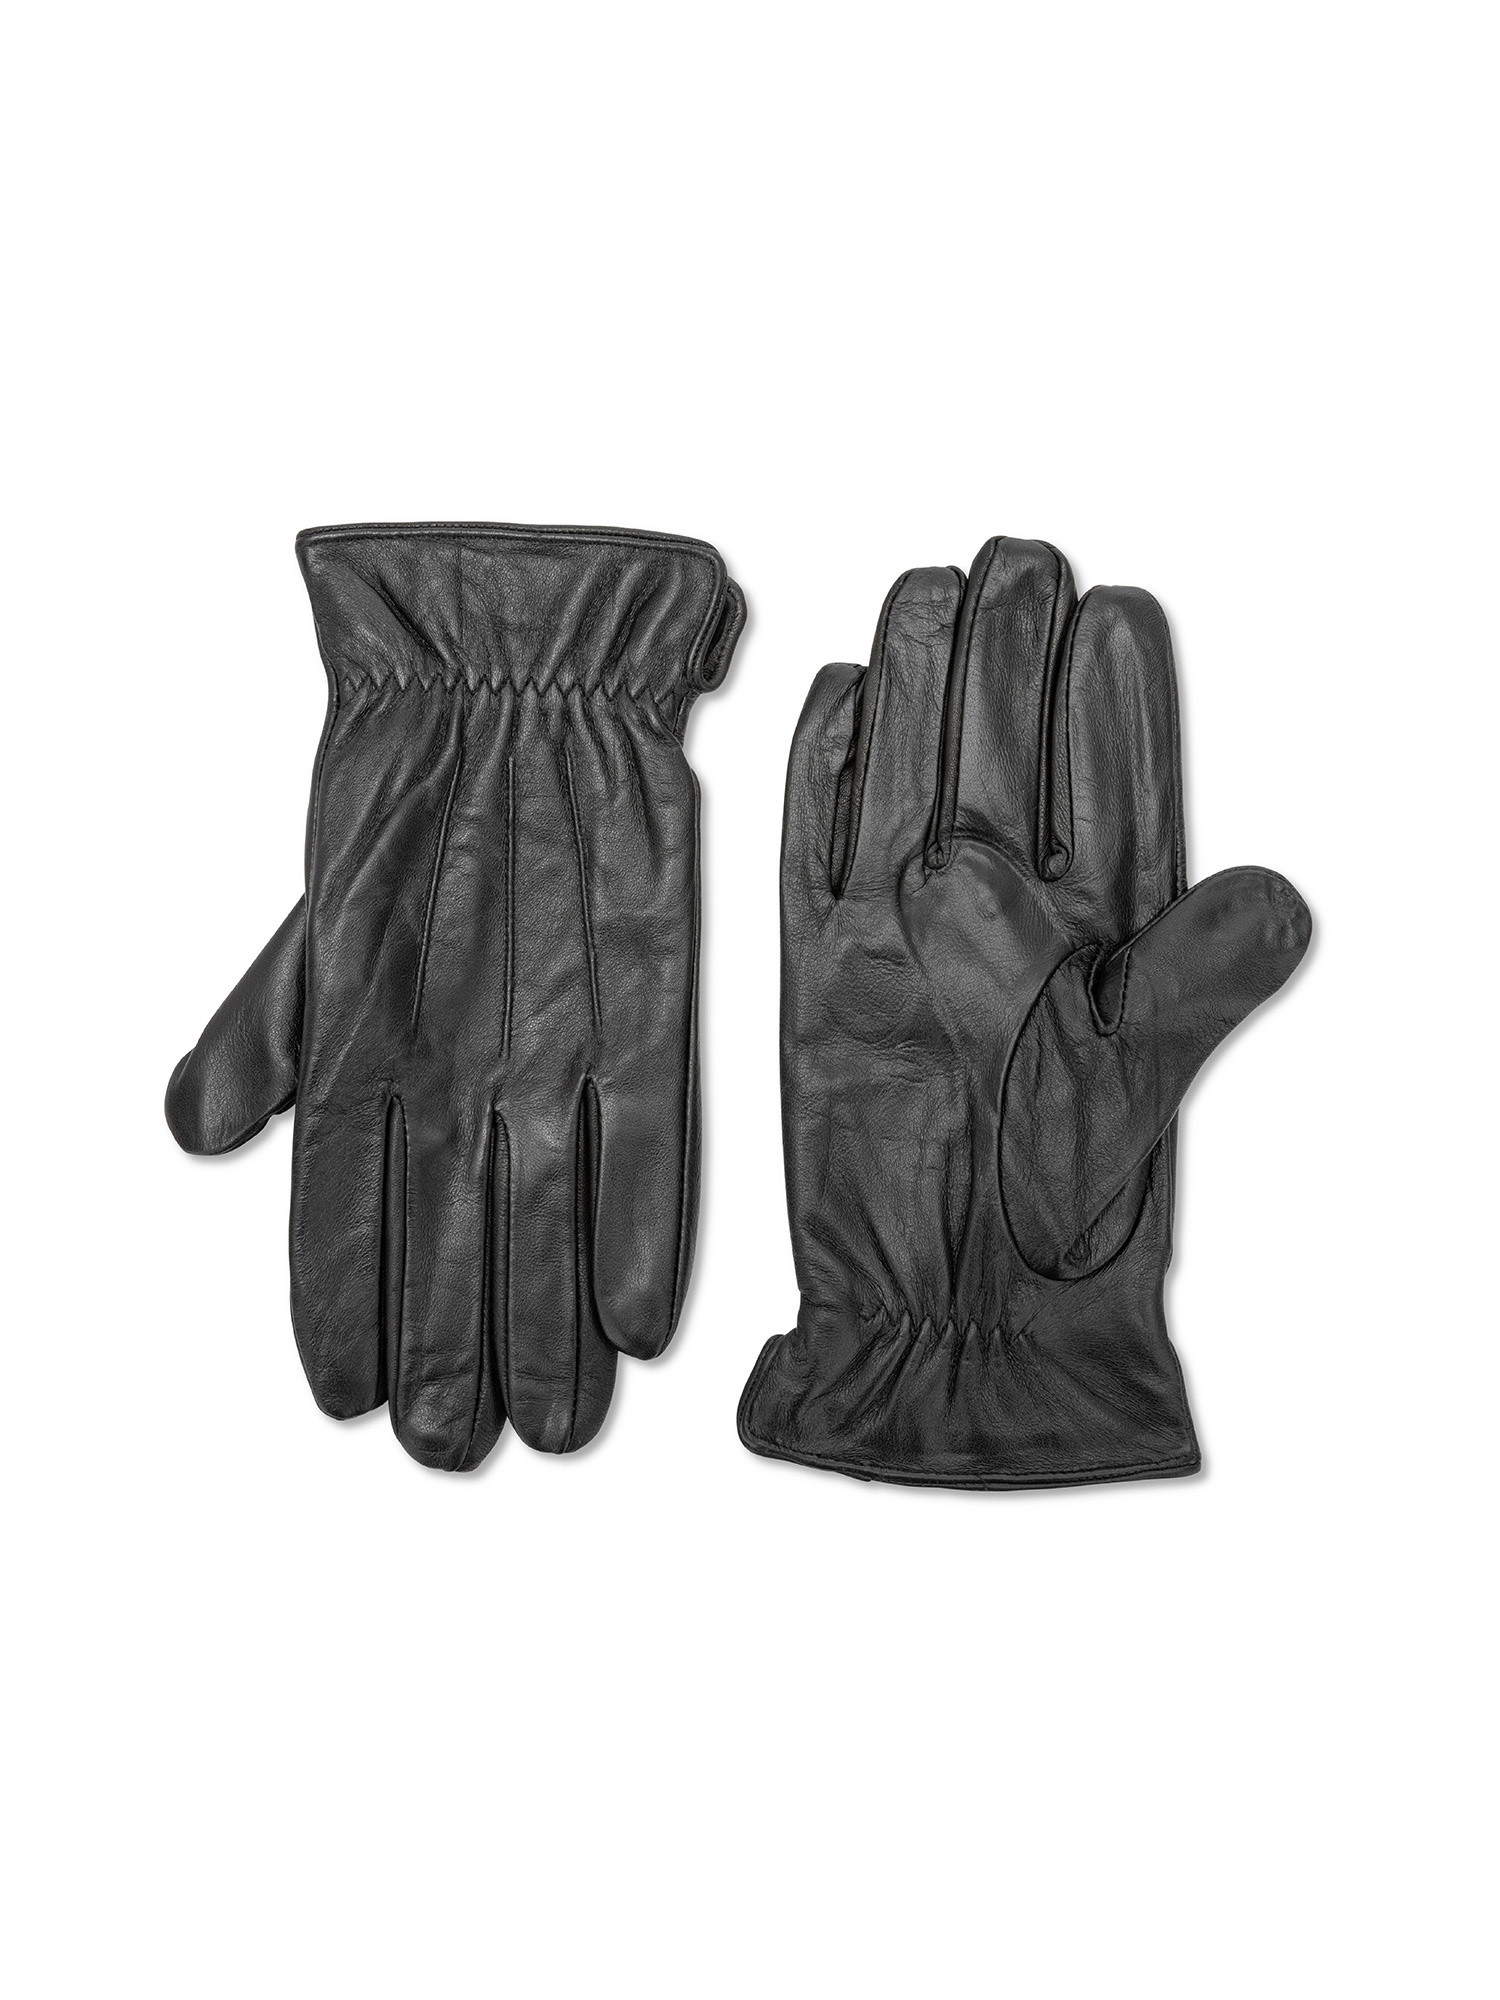 Luca D'Altieri - Genuine leather gloves, Black, large image number 0